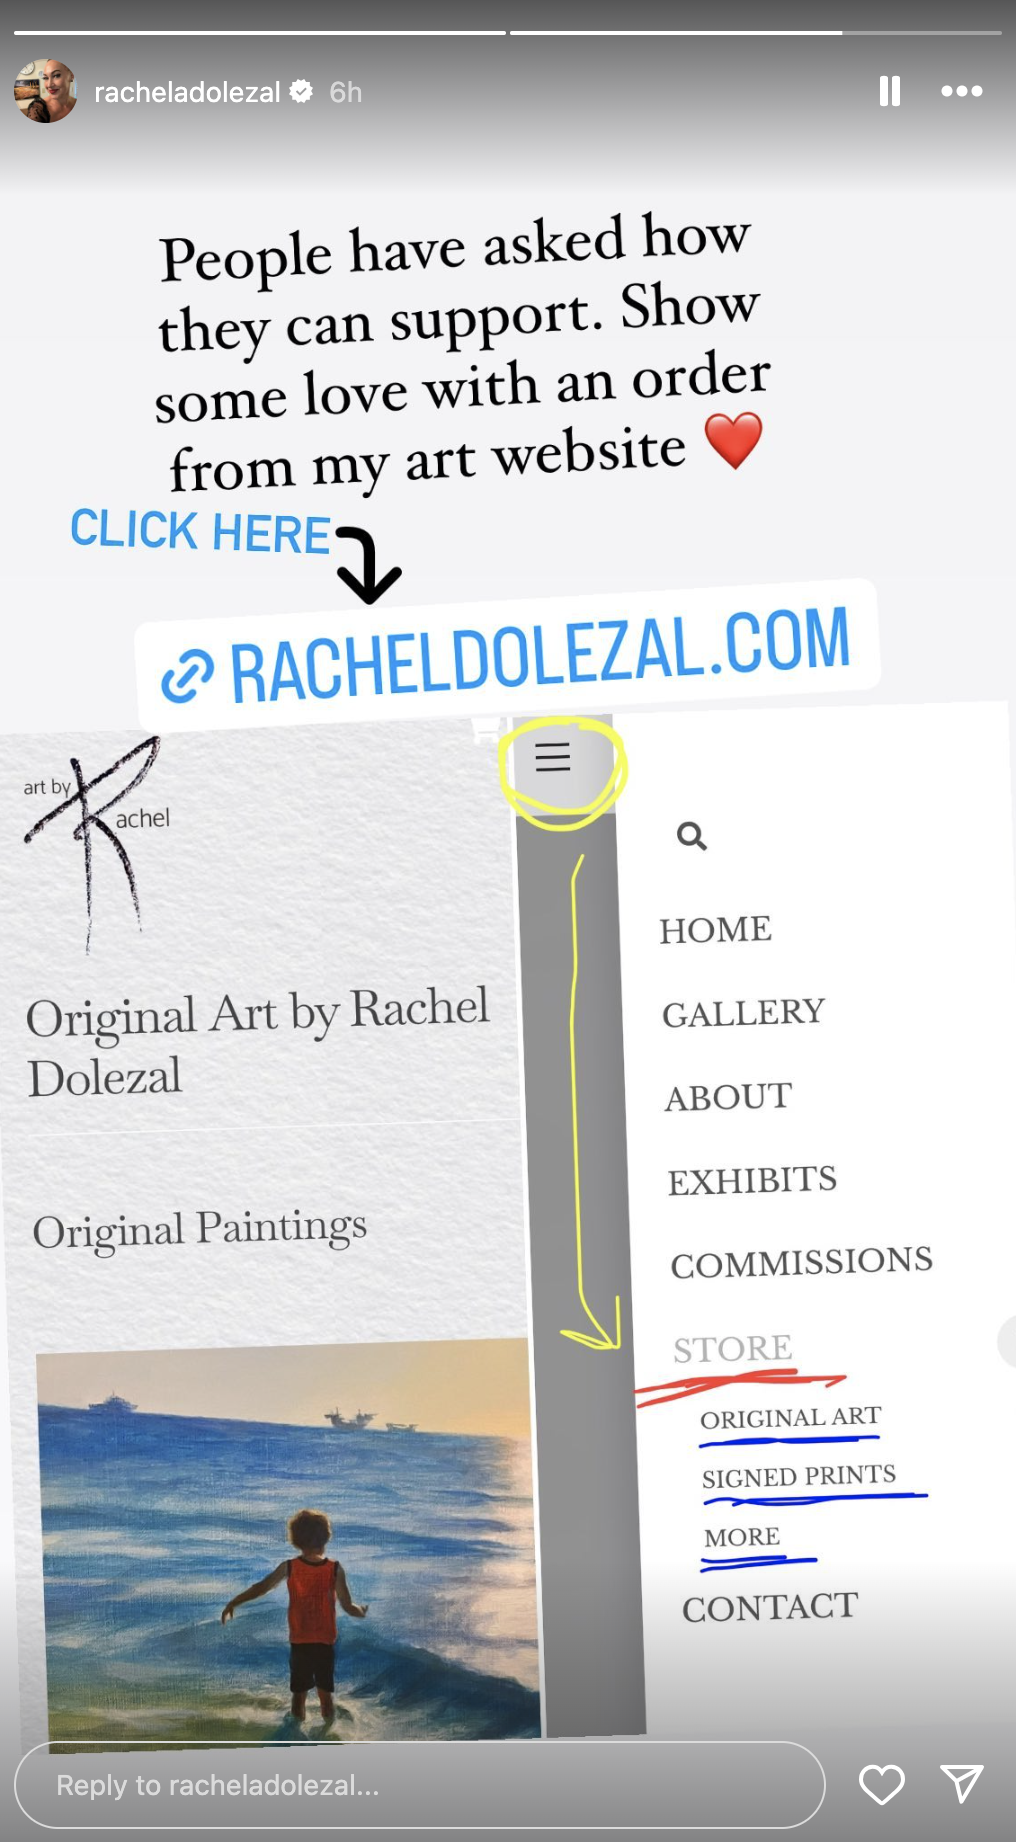 An Instagram story screenshot featuring Rachel Dolezal promoting her art website with options: Gallery, Exhibits, Original Art, Store, More, Contact